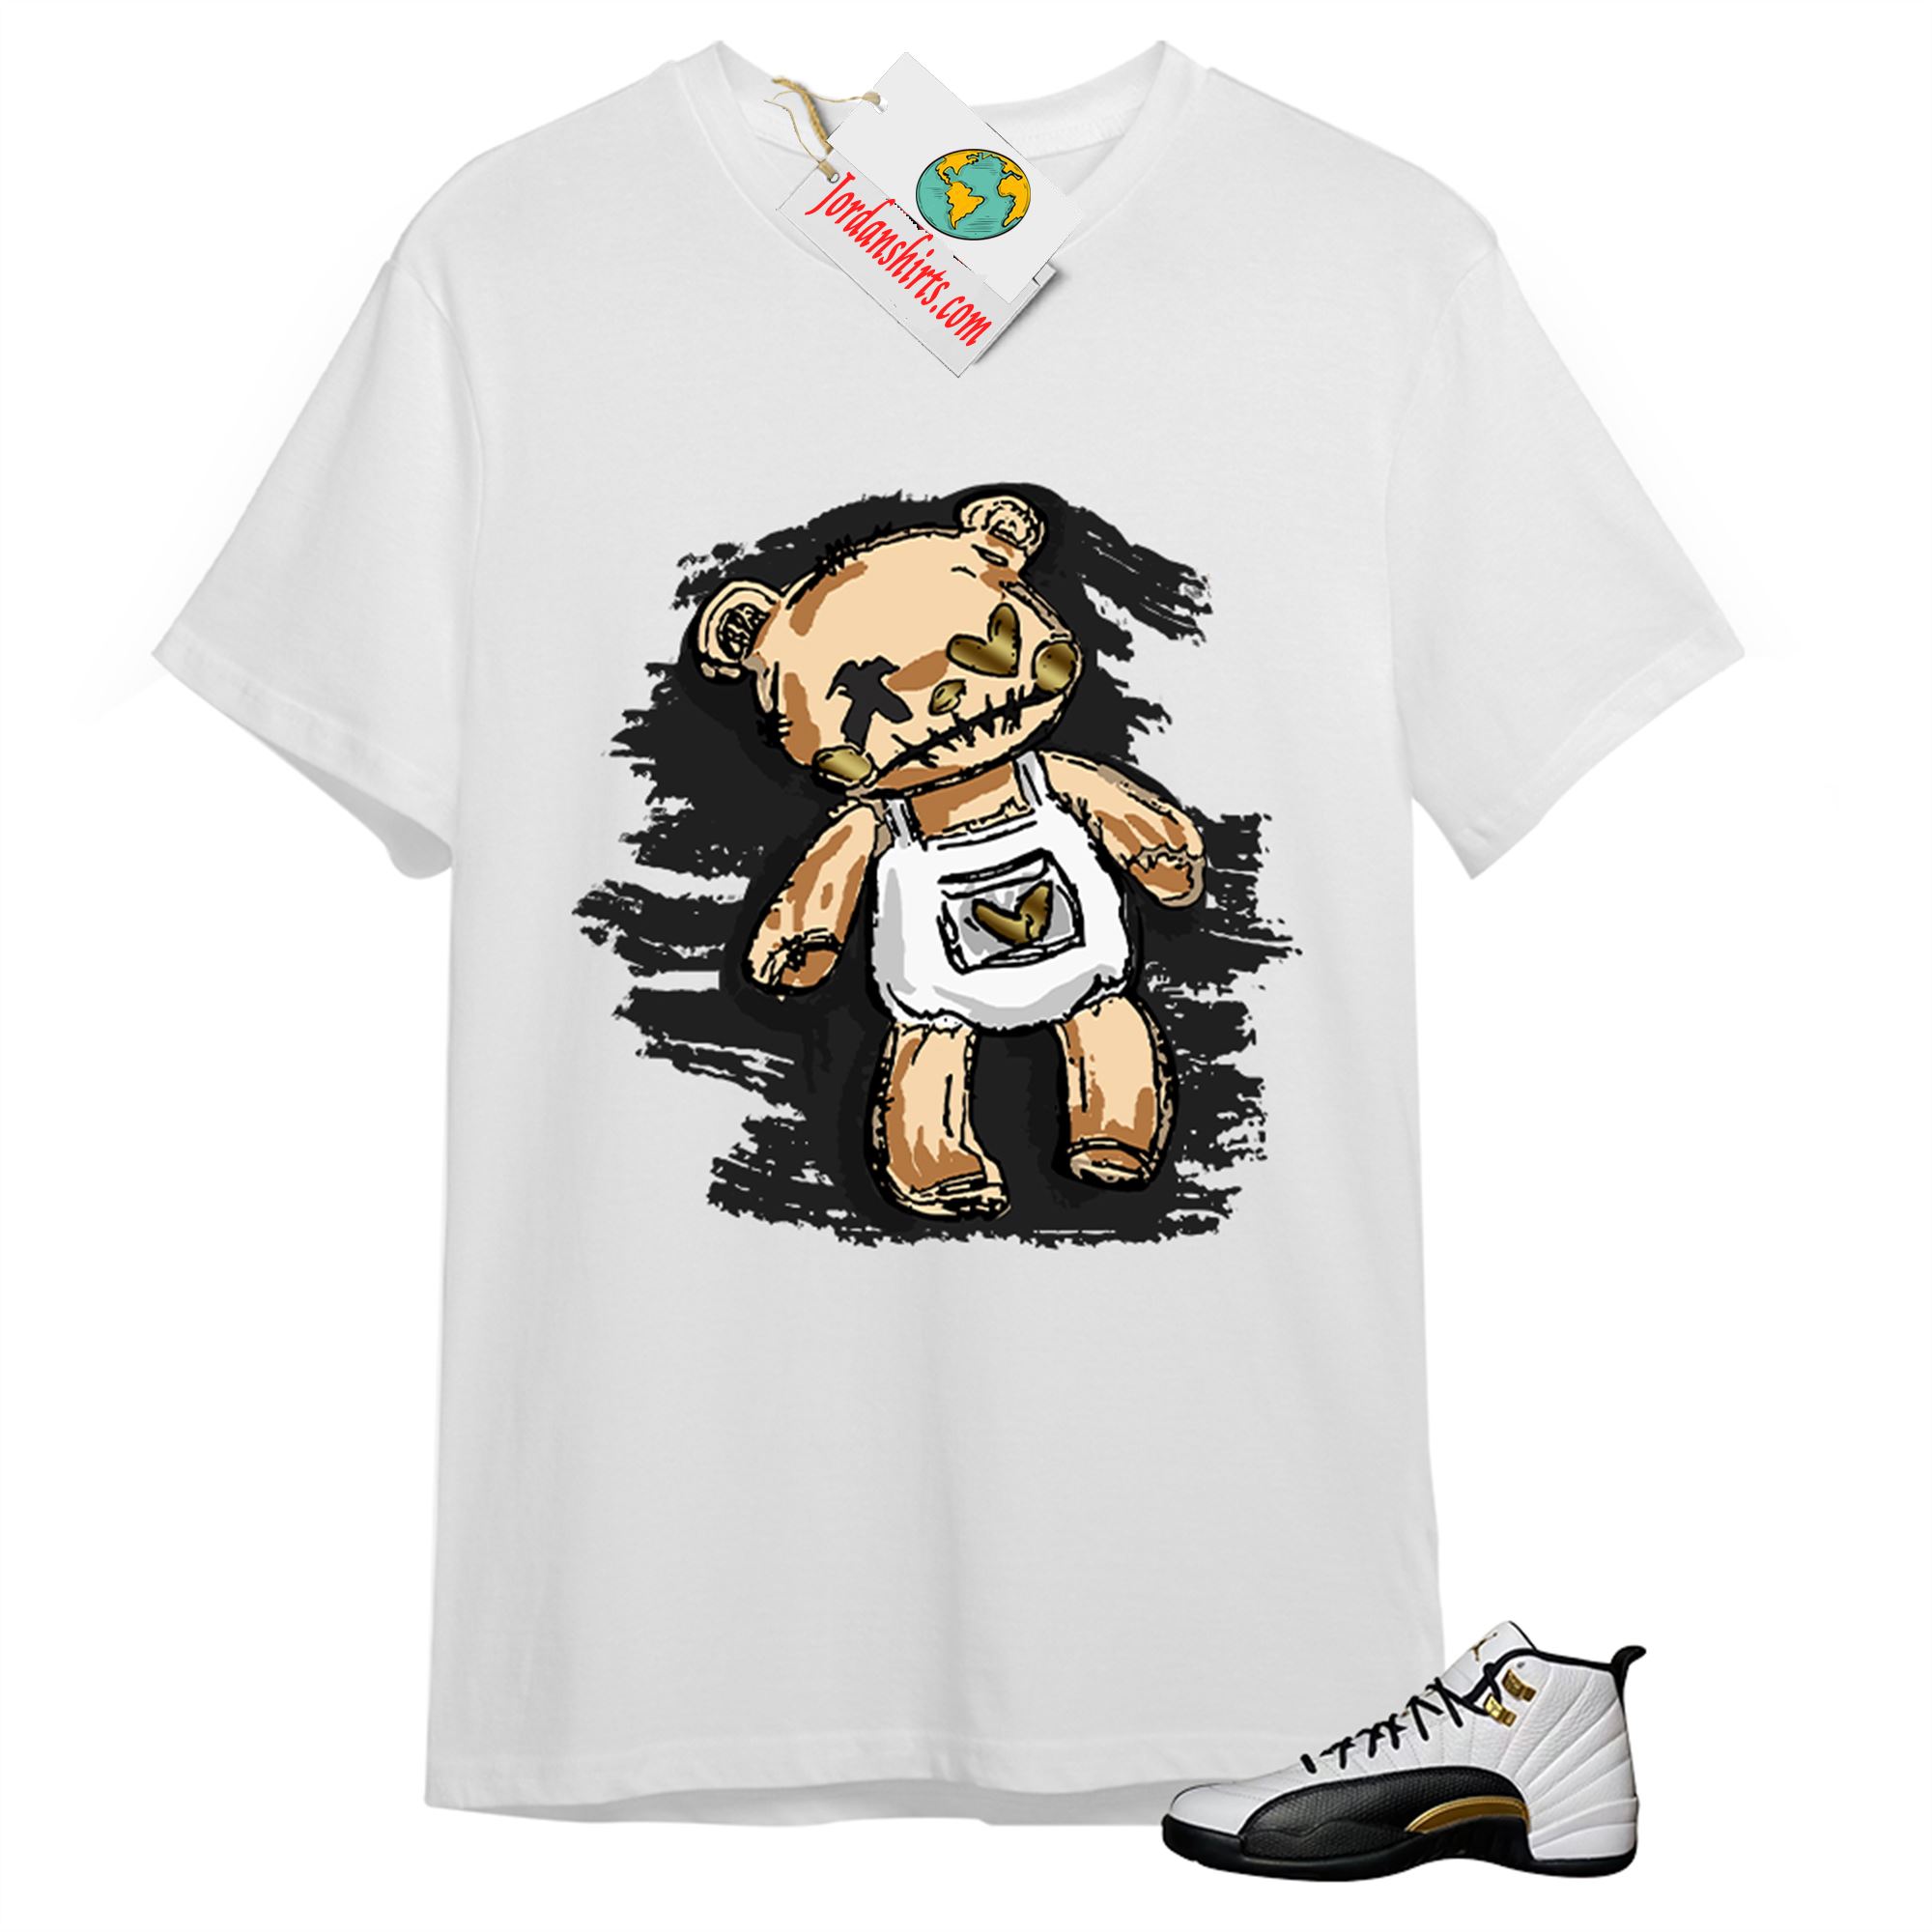 Jordan 12 Shirt, Teddy Bear Broken Heart White T-shirt Air Jordan 12 Royalty 12s Full Size Up To 5xl